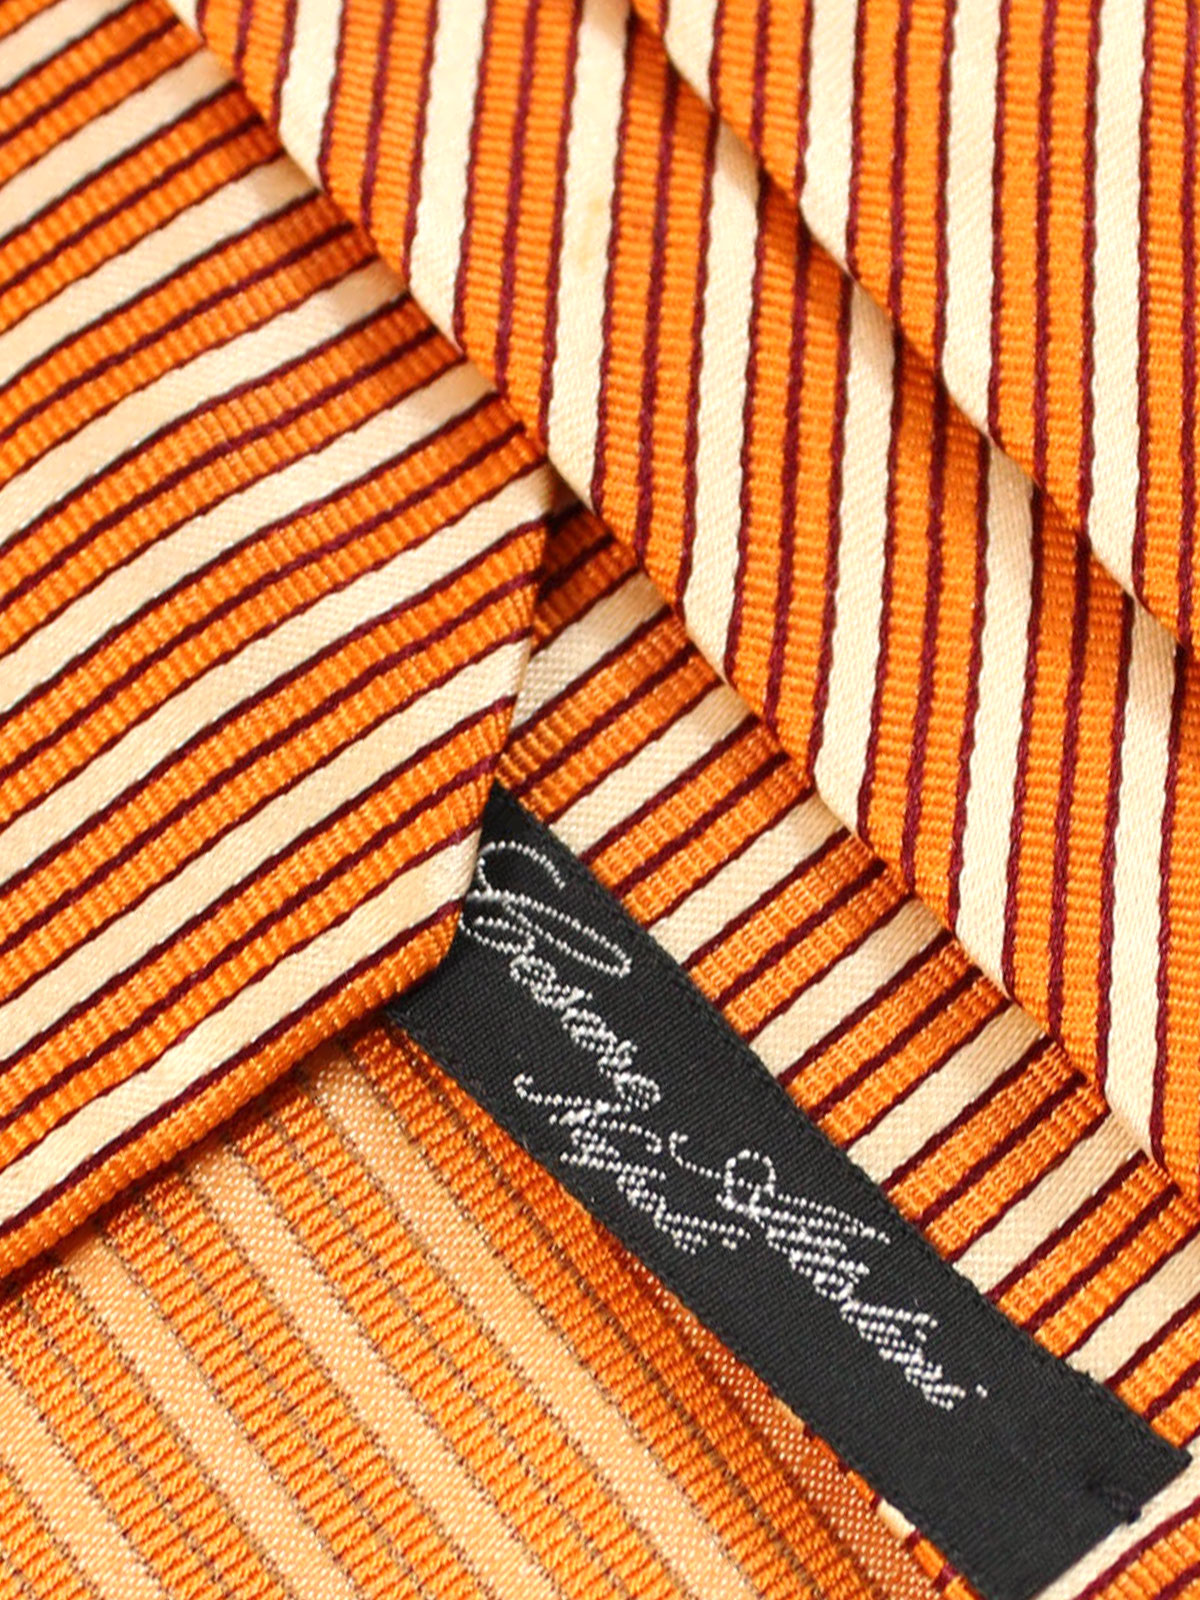 Cesare Attolini Unlined Tie Orange Stripes